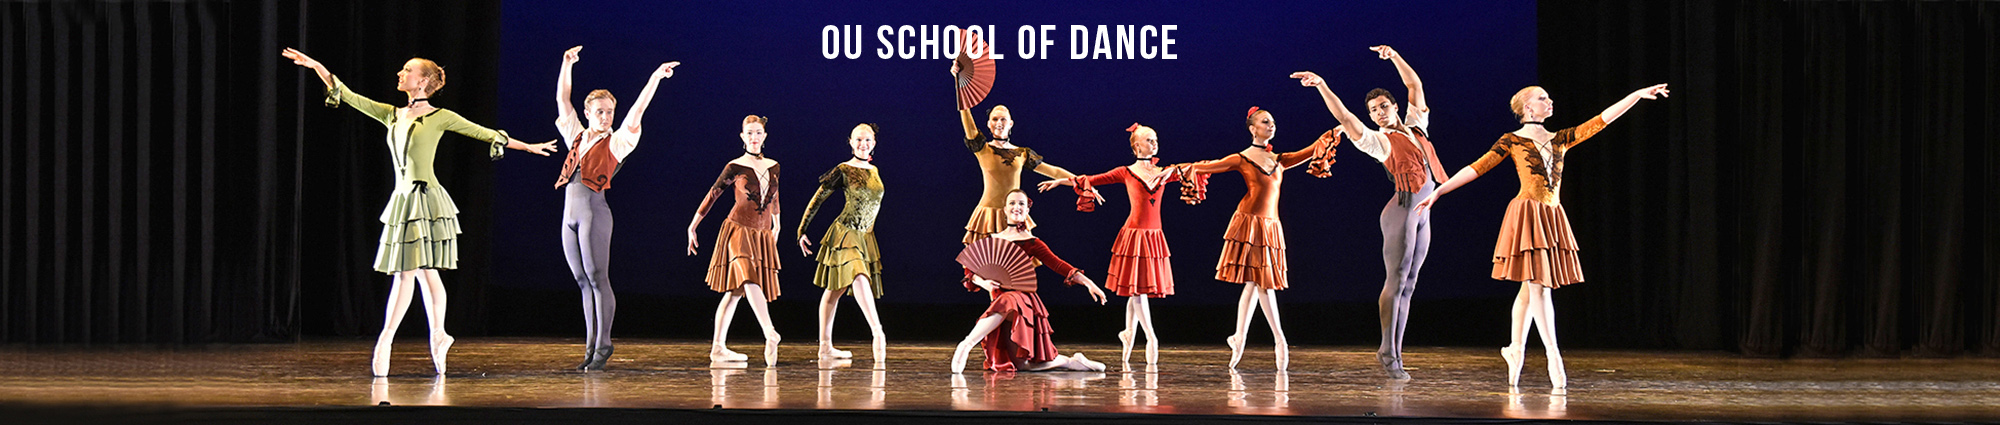 OU School of Dance image